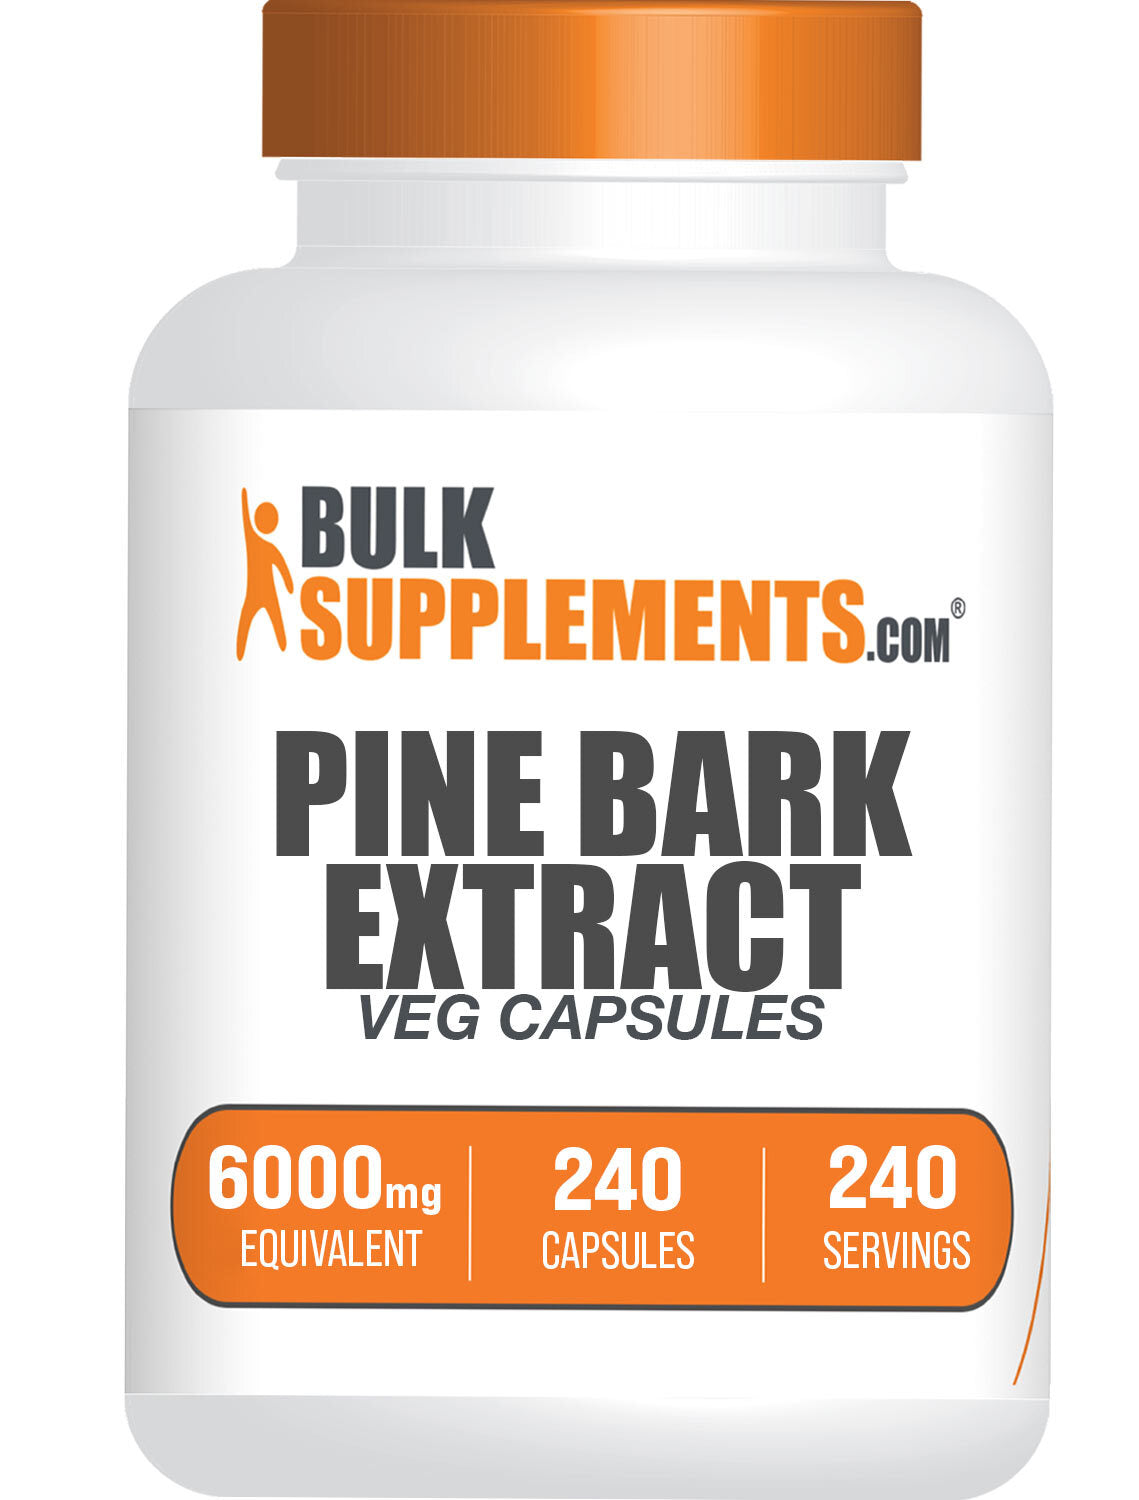 pine bark extract capsules